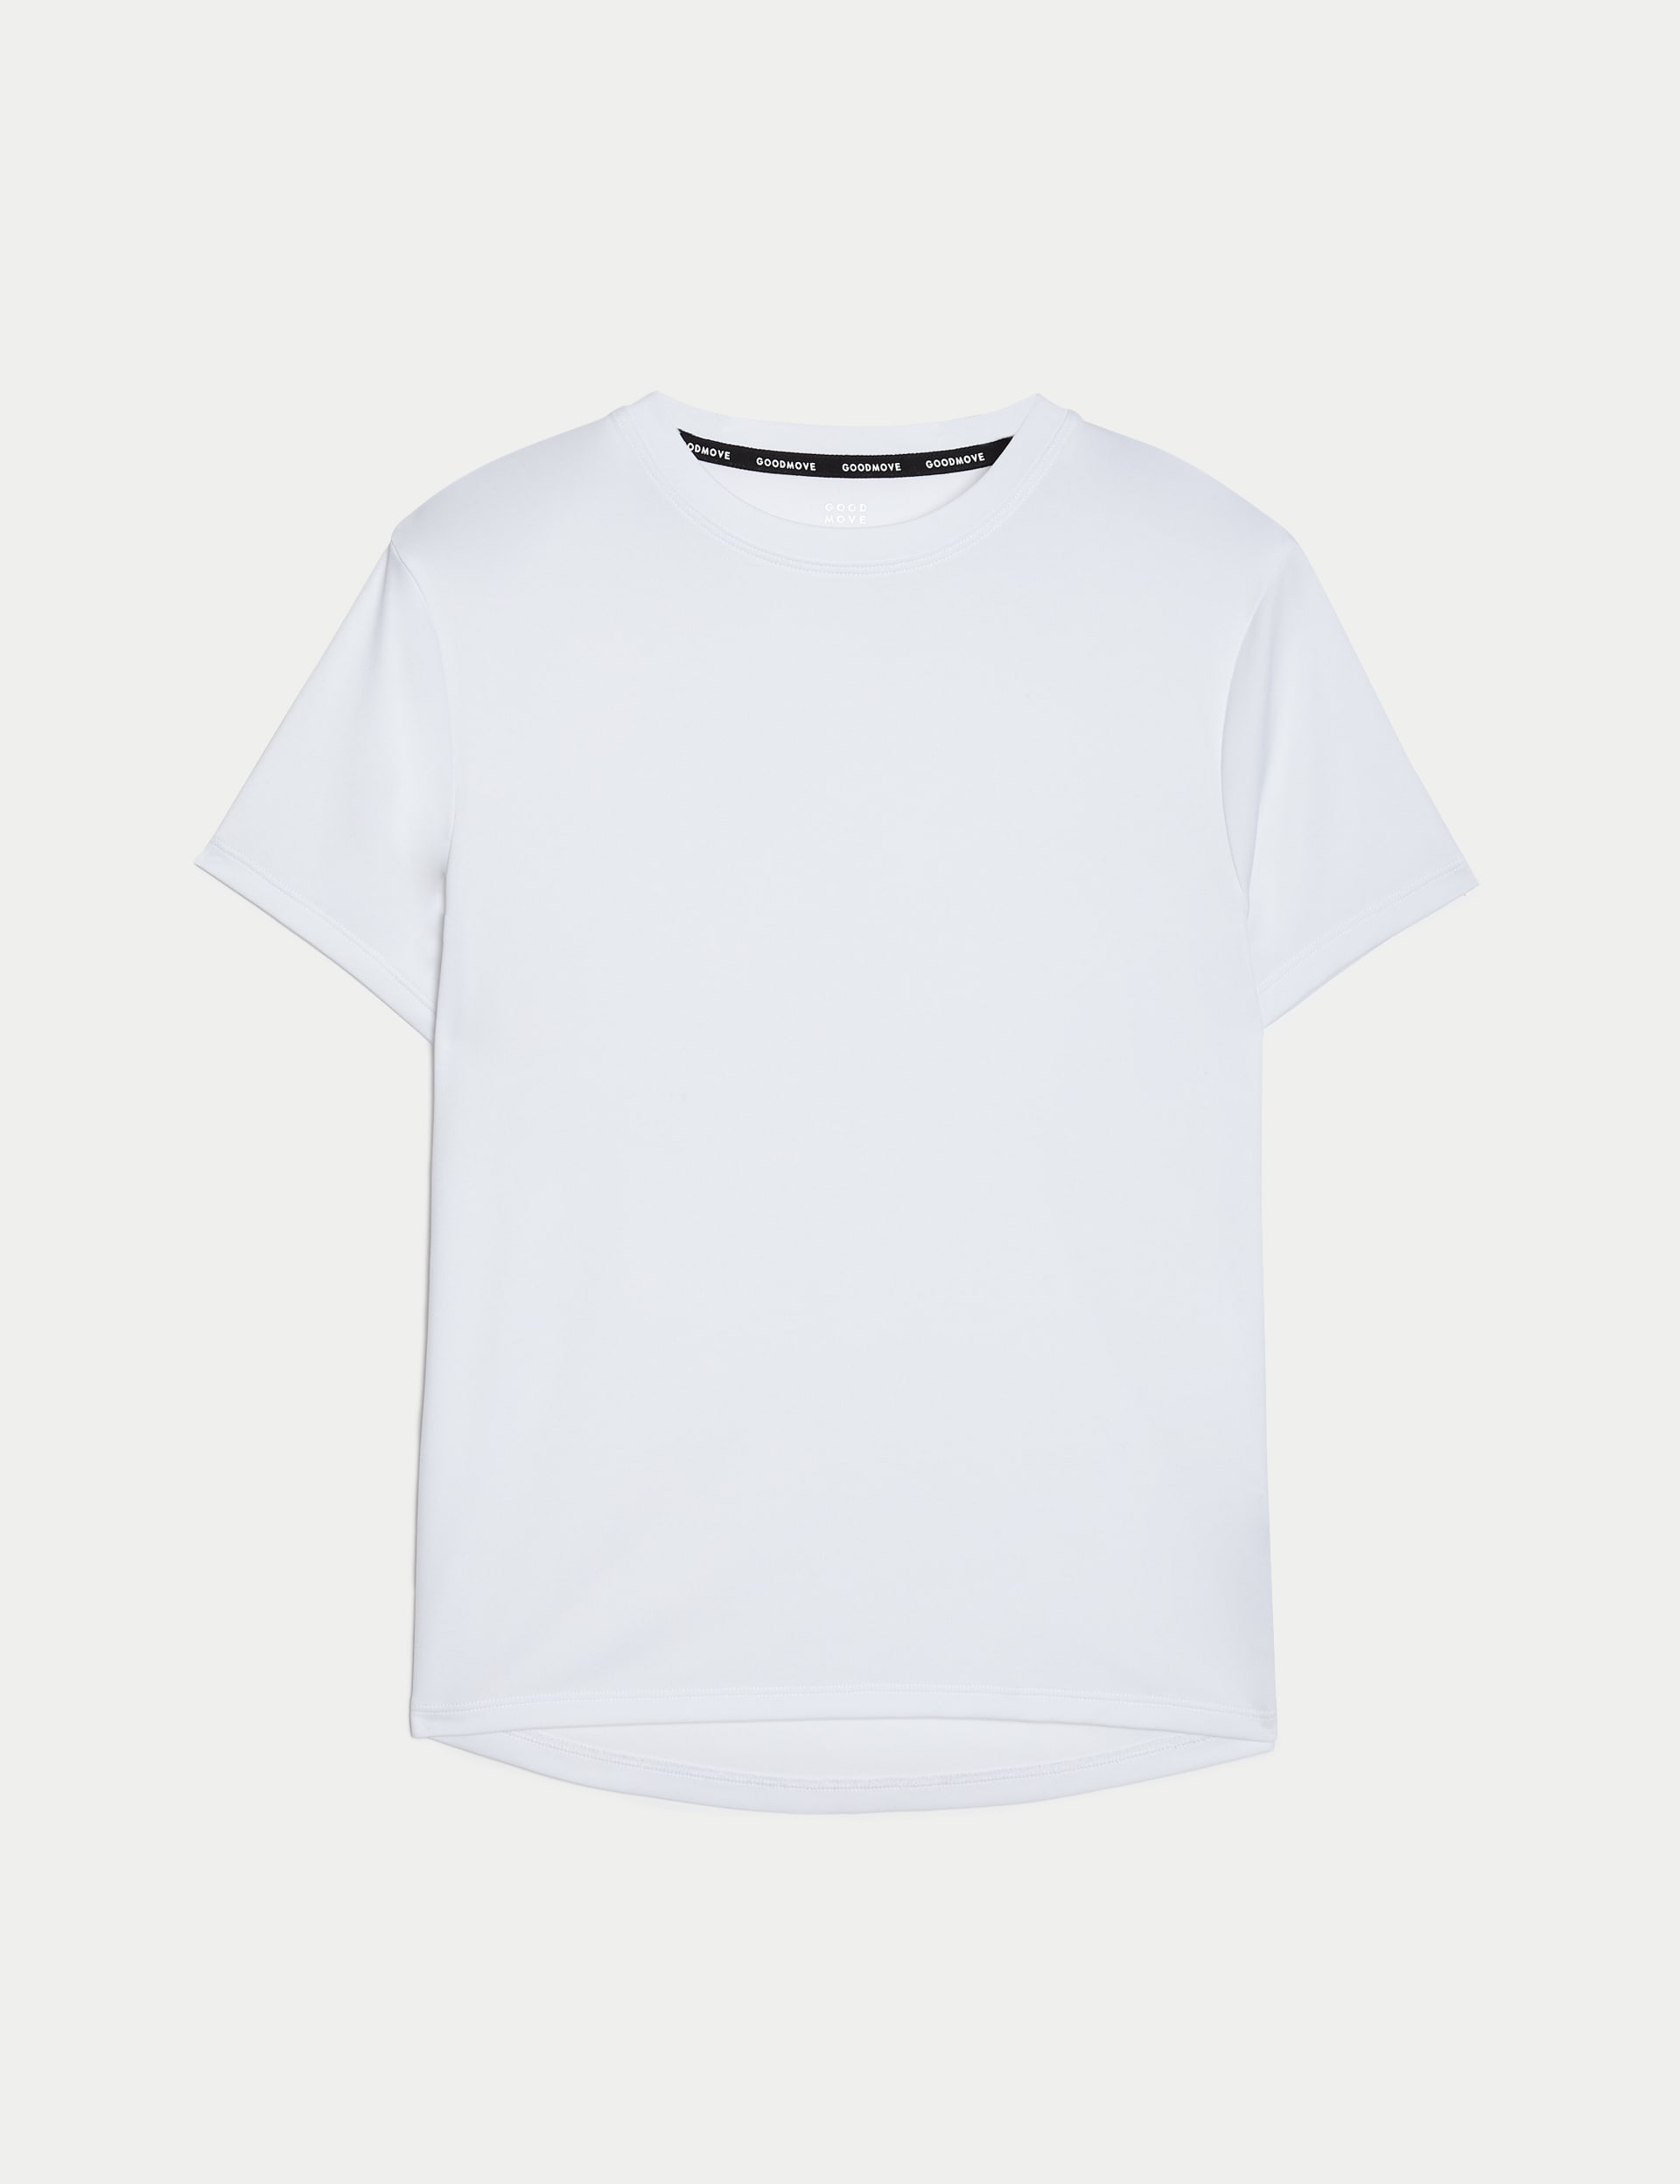 Unisex Sports T-Shirt (6-16 Yrs)